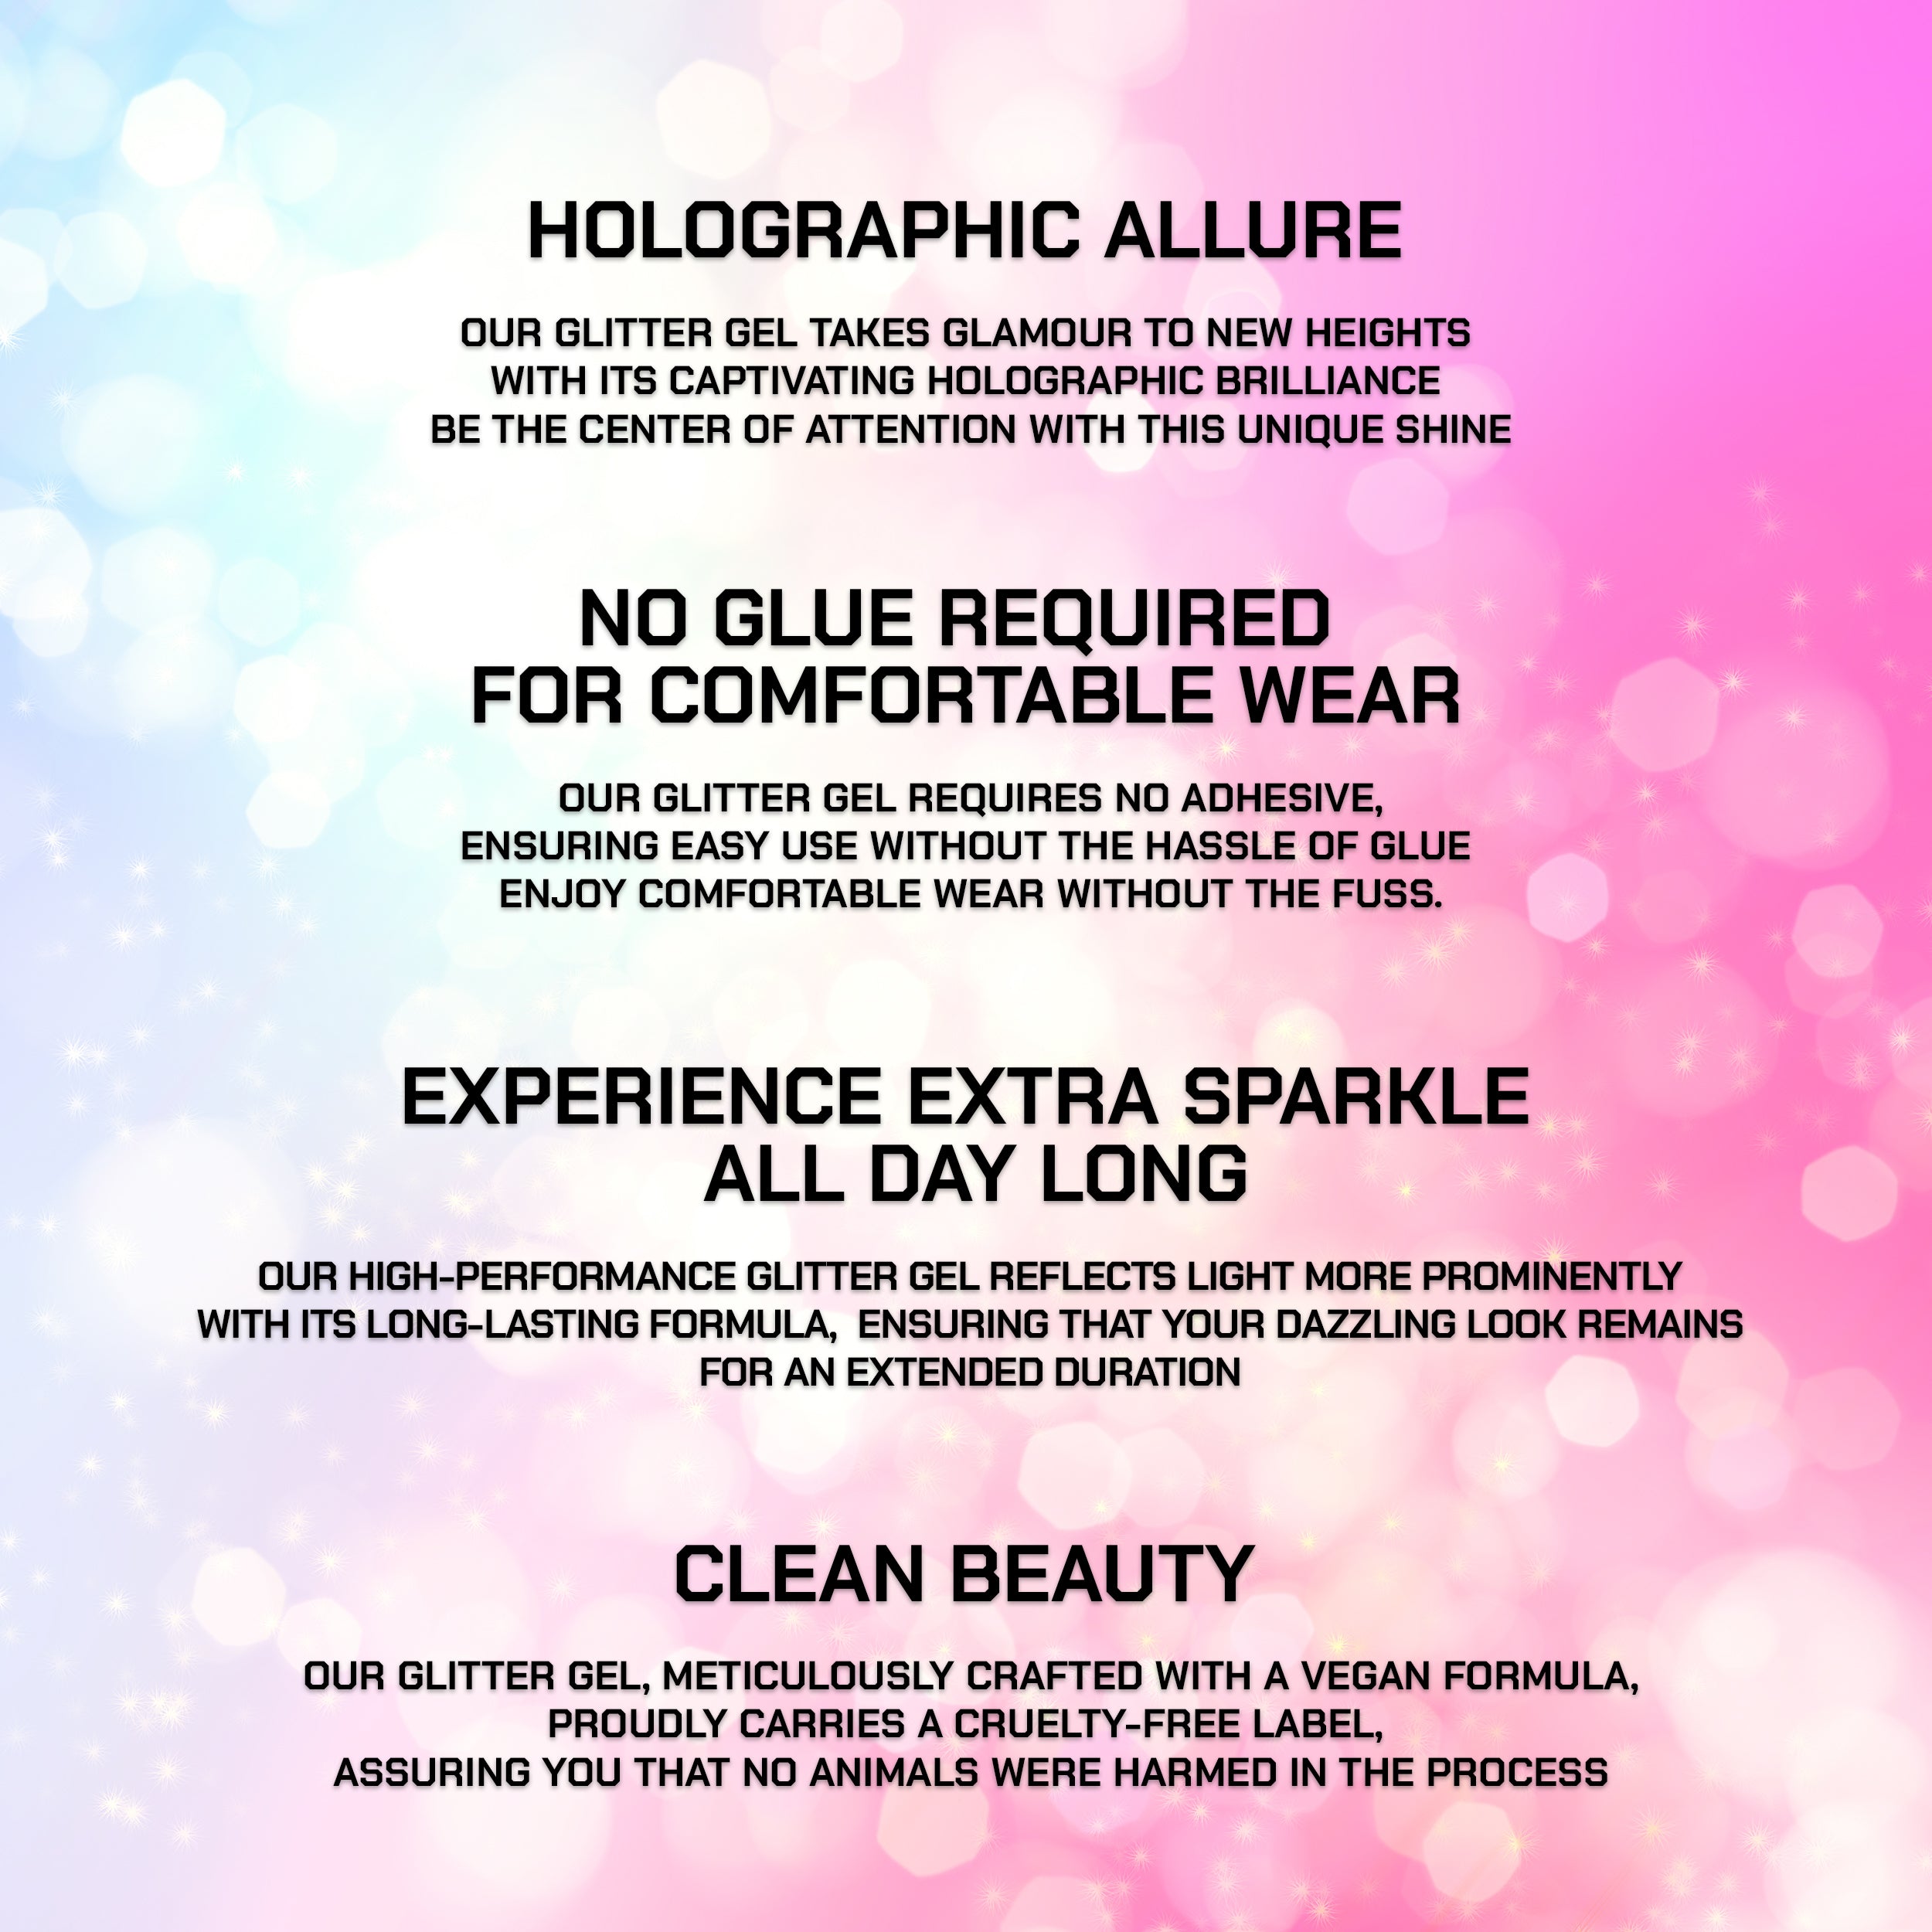 Hologram Glitter Gel (008, Princess Behavior)